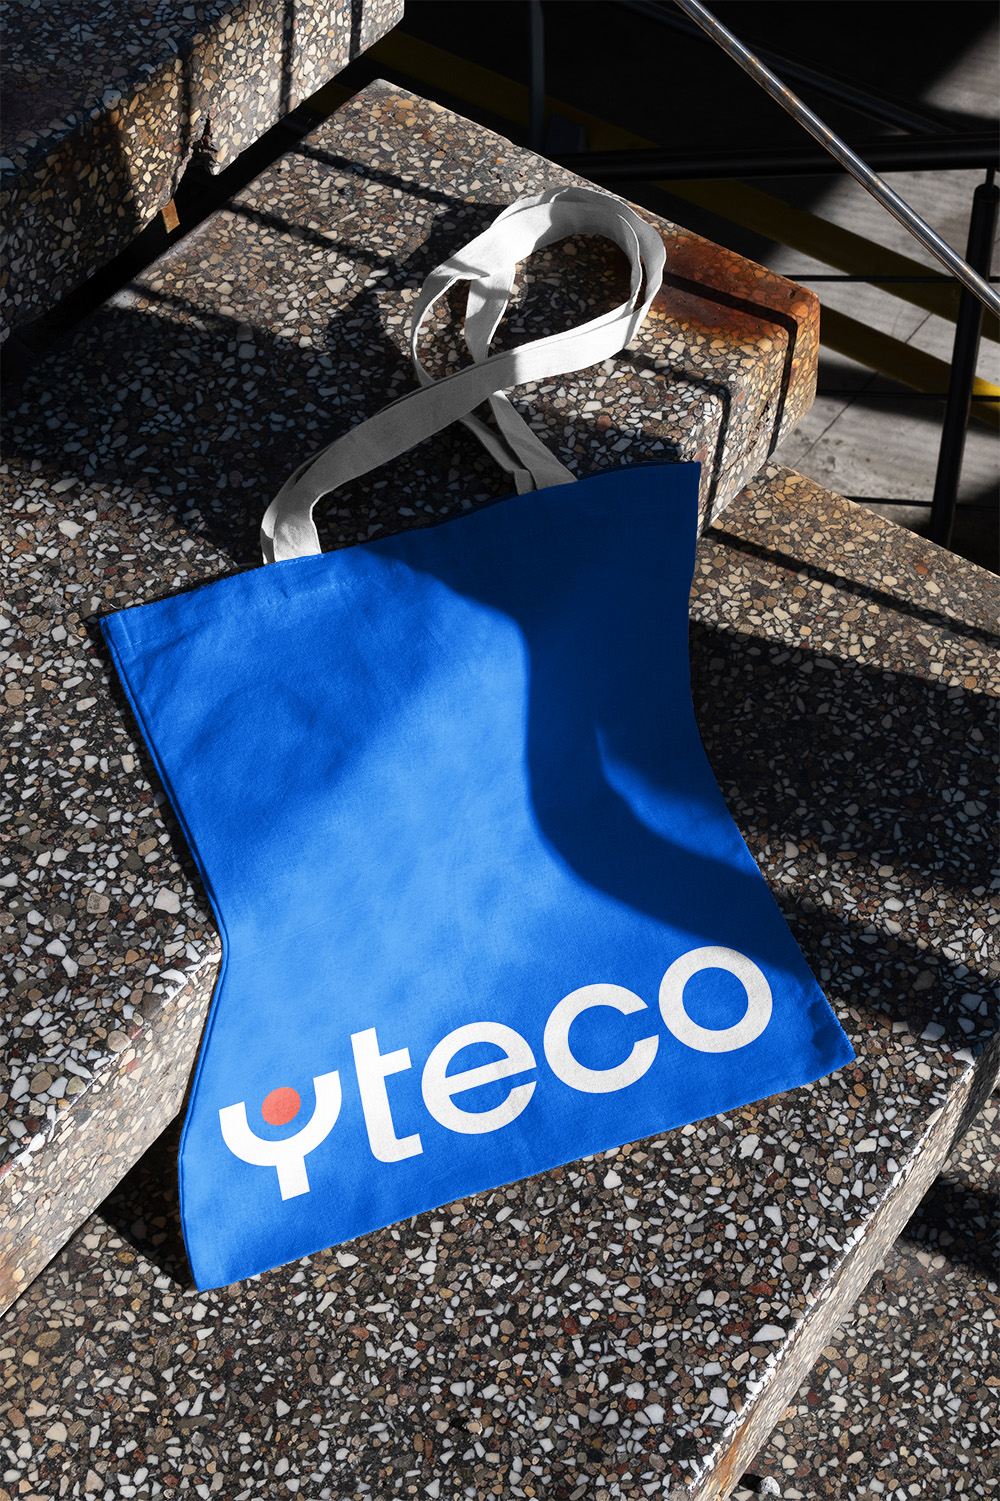 YTECO tote-bag designed mockup